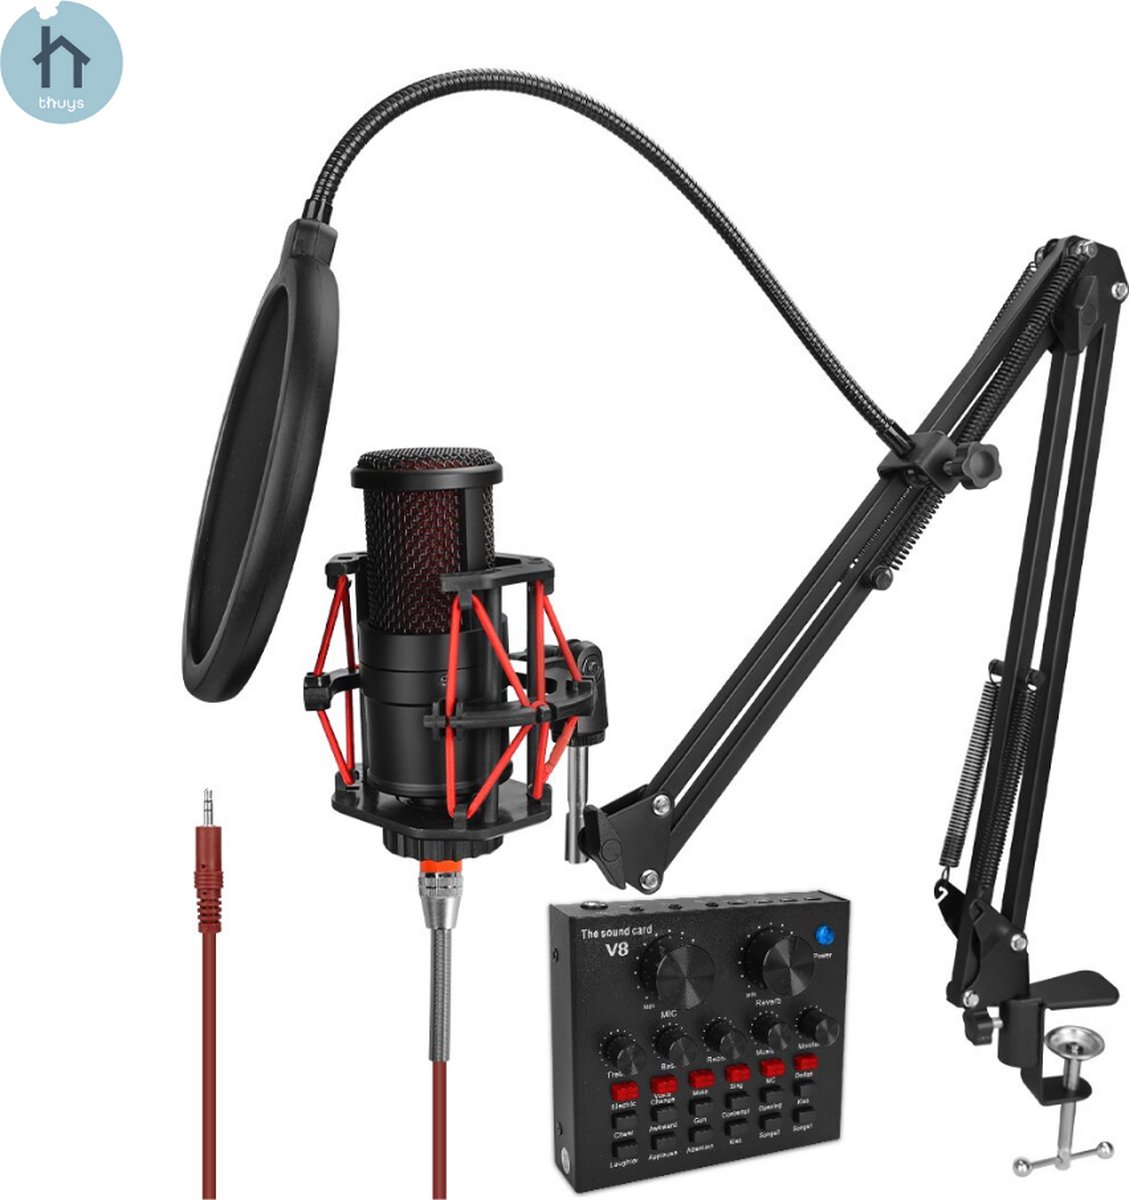 Microfoon - Microfoon Met Arm Professioneel - Microfoon Voor PC Met Audio Interface- USB - Zwart/Rood